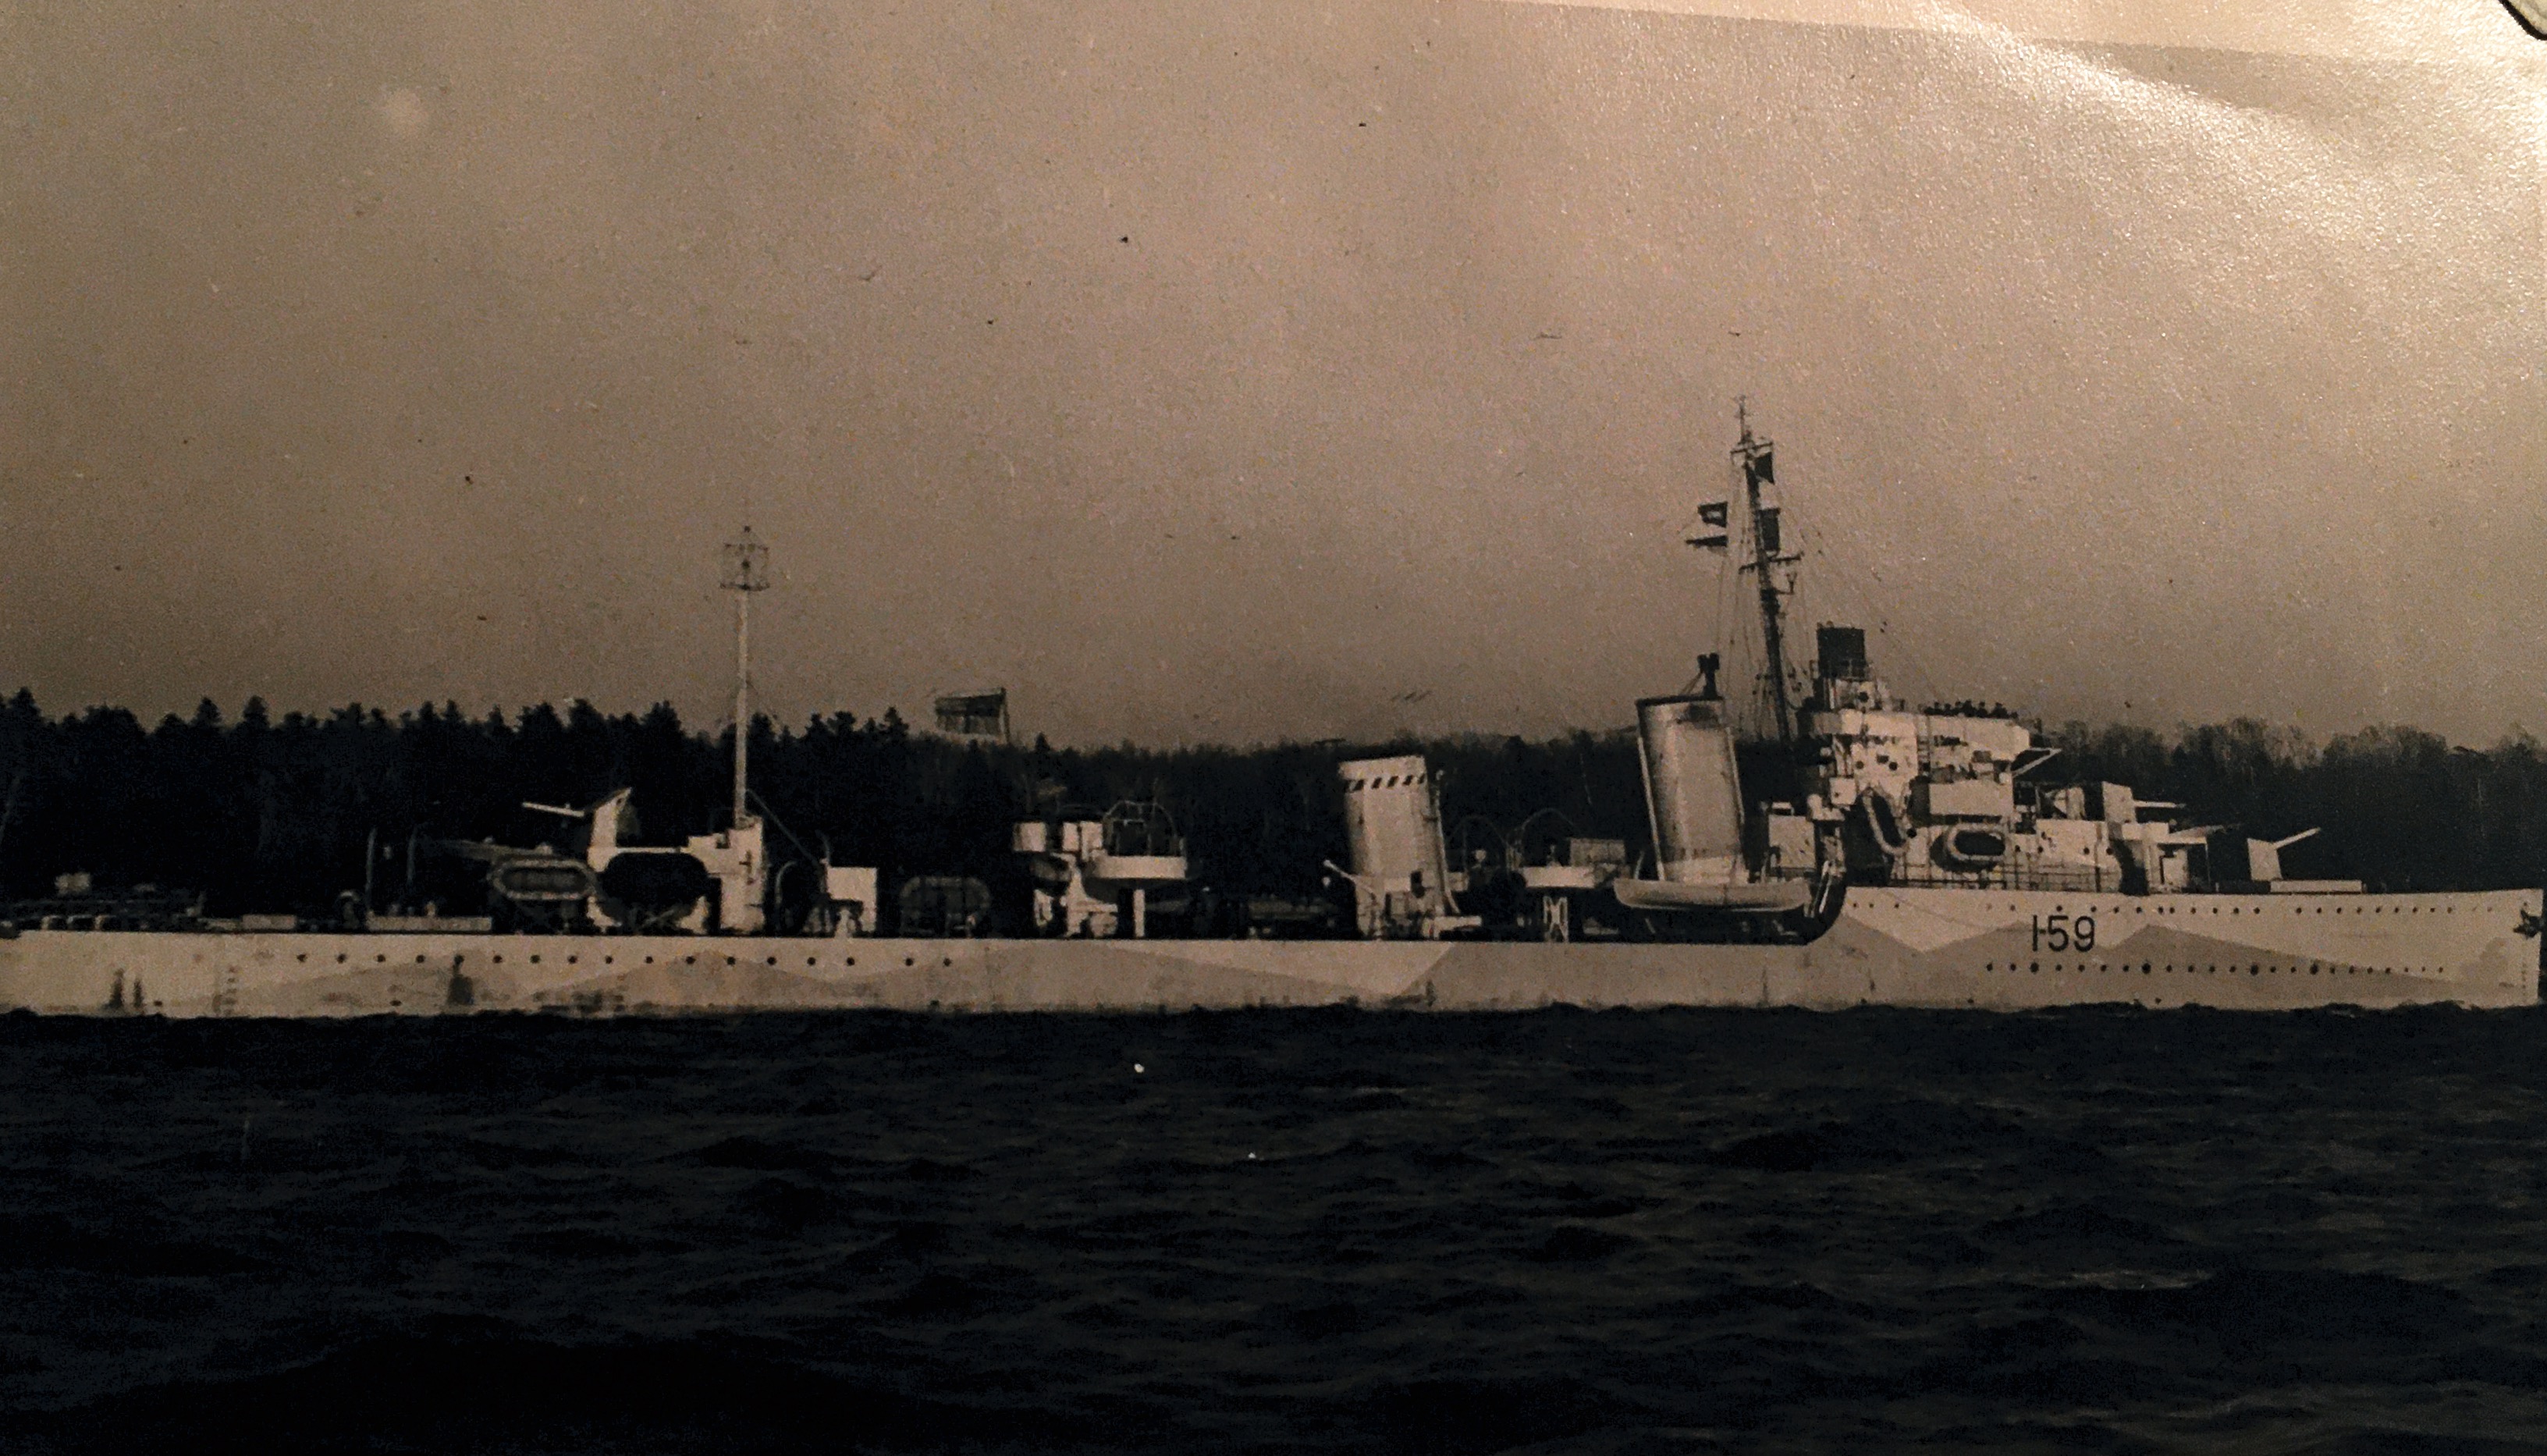 R.CN., HMCS Skeena, I 59, Rivers Class, Destroyer, WW2, 2 guns fore, one gun aft, anti-aircraft Bofors guns.